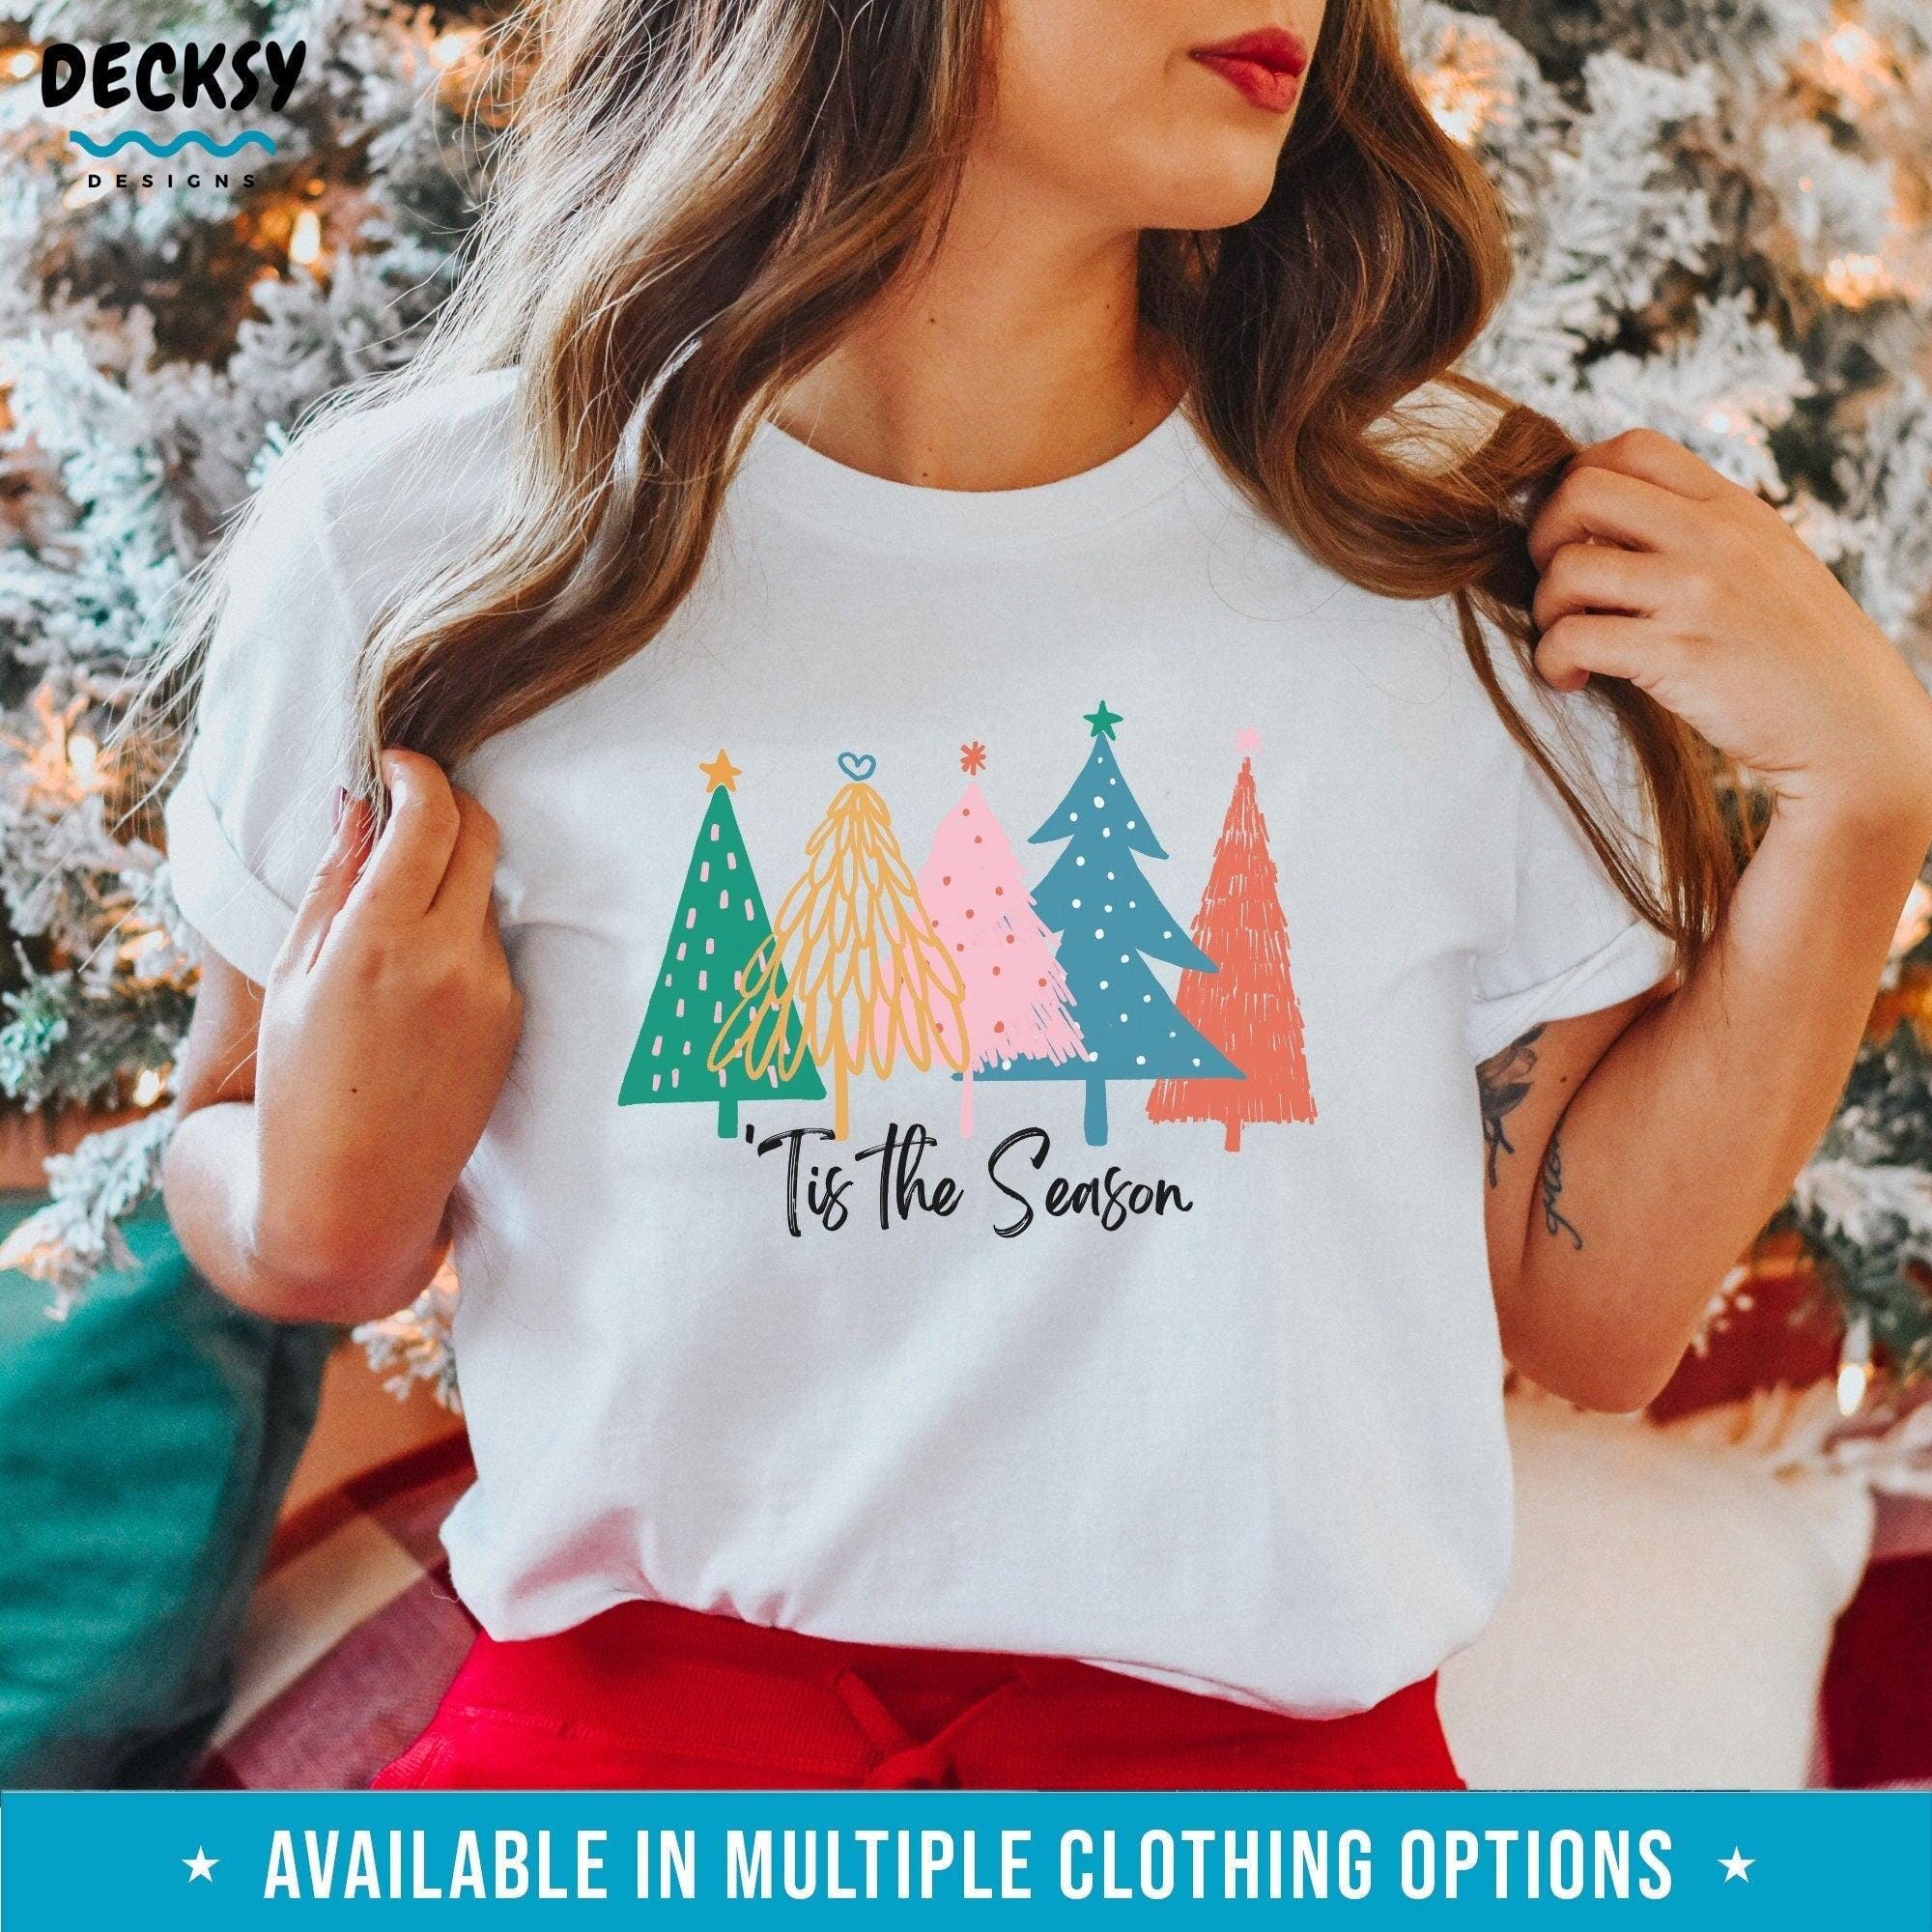 Christmas Tree Shirt, Tis The Season, Merry Christmas Gift-Clothing:Gender-Neutral Adult Clothing:Tops & Tees:T-shirts:Graphic Tees-DecksyDesigns